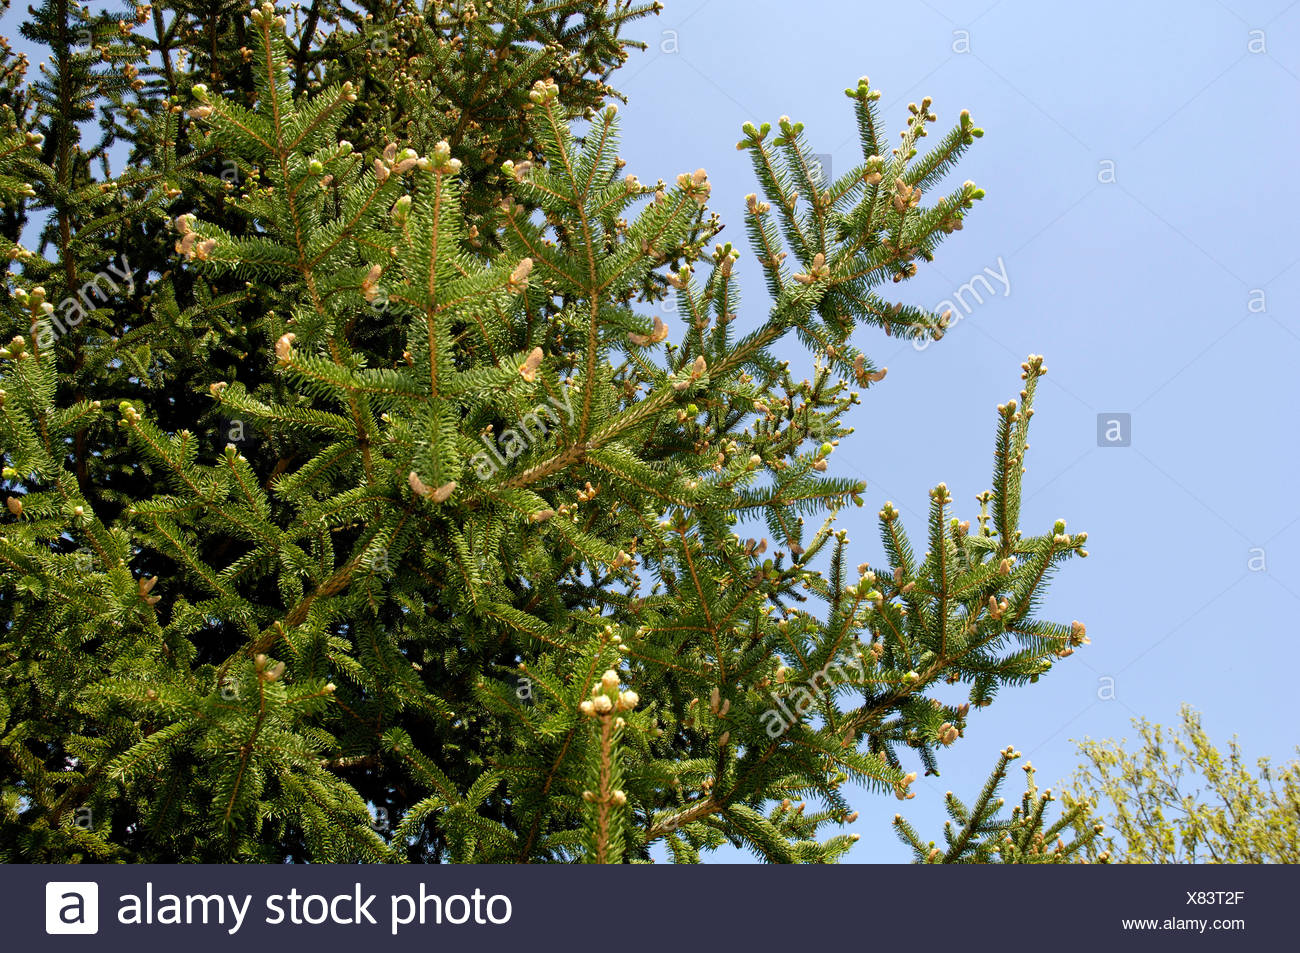 Dragon Spruce Stock Photos & Dragon Spruce Stock Images - Alamy